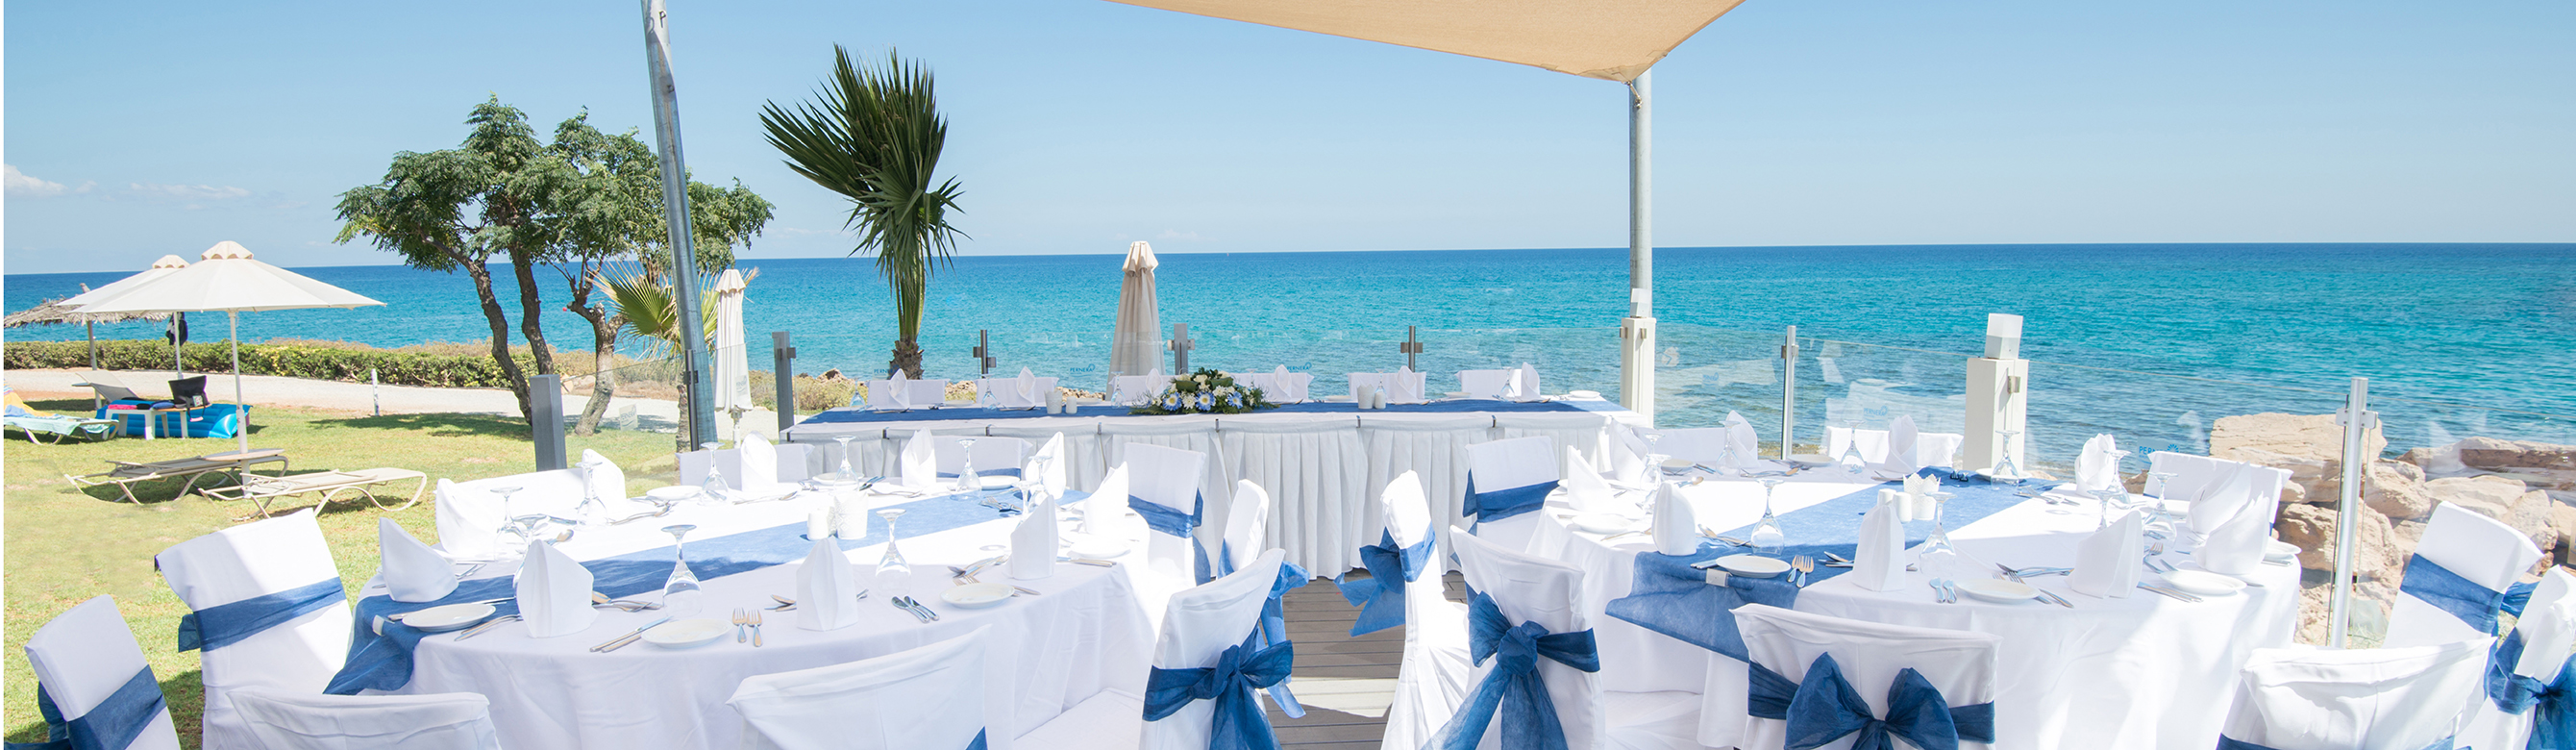 Book your wedding day in Pernera Beach Hotel